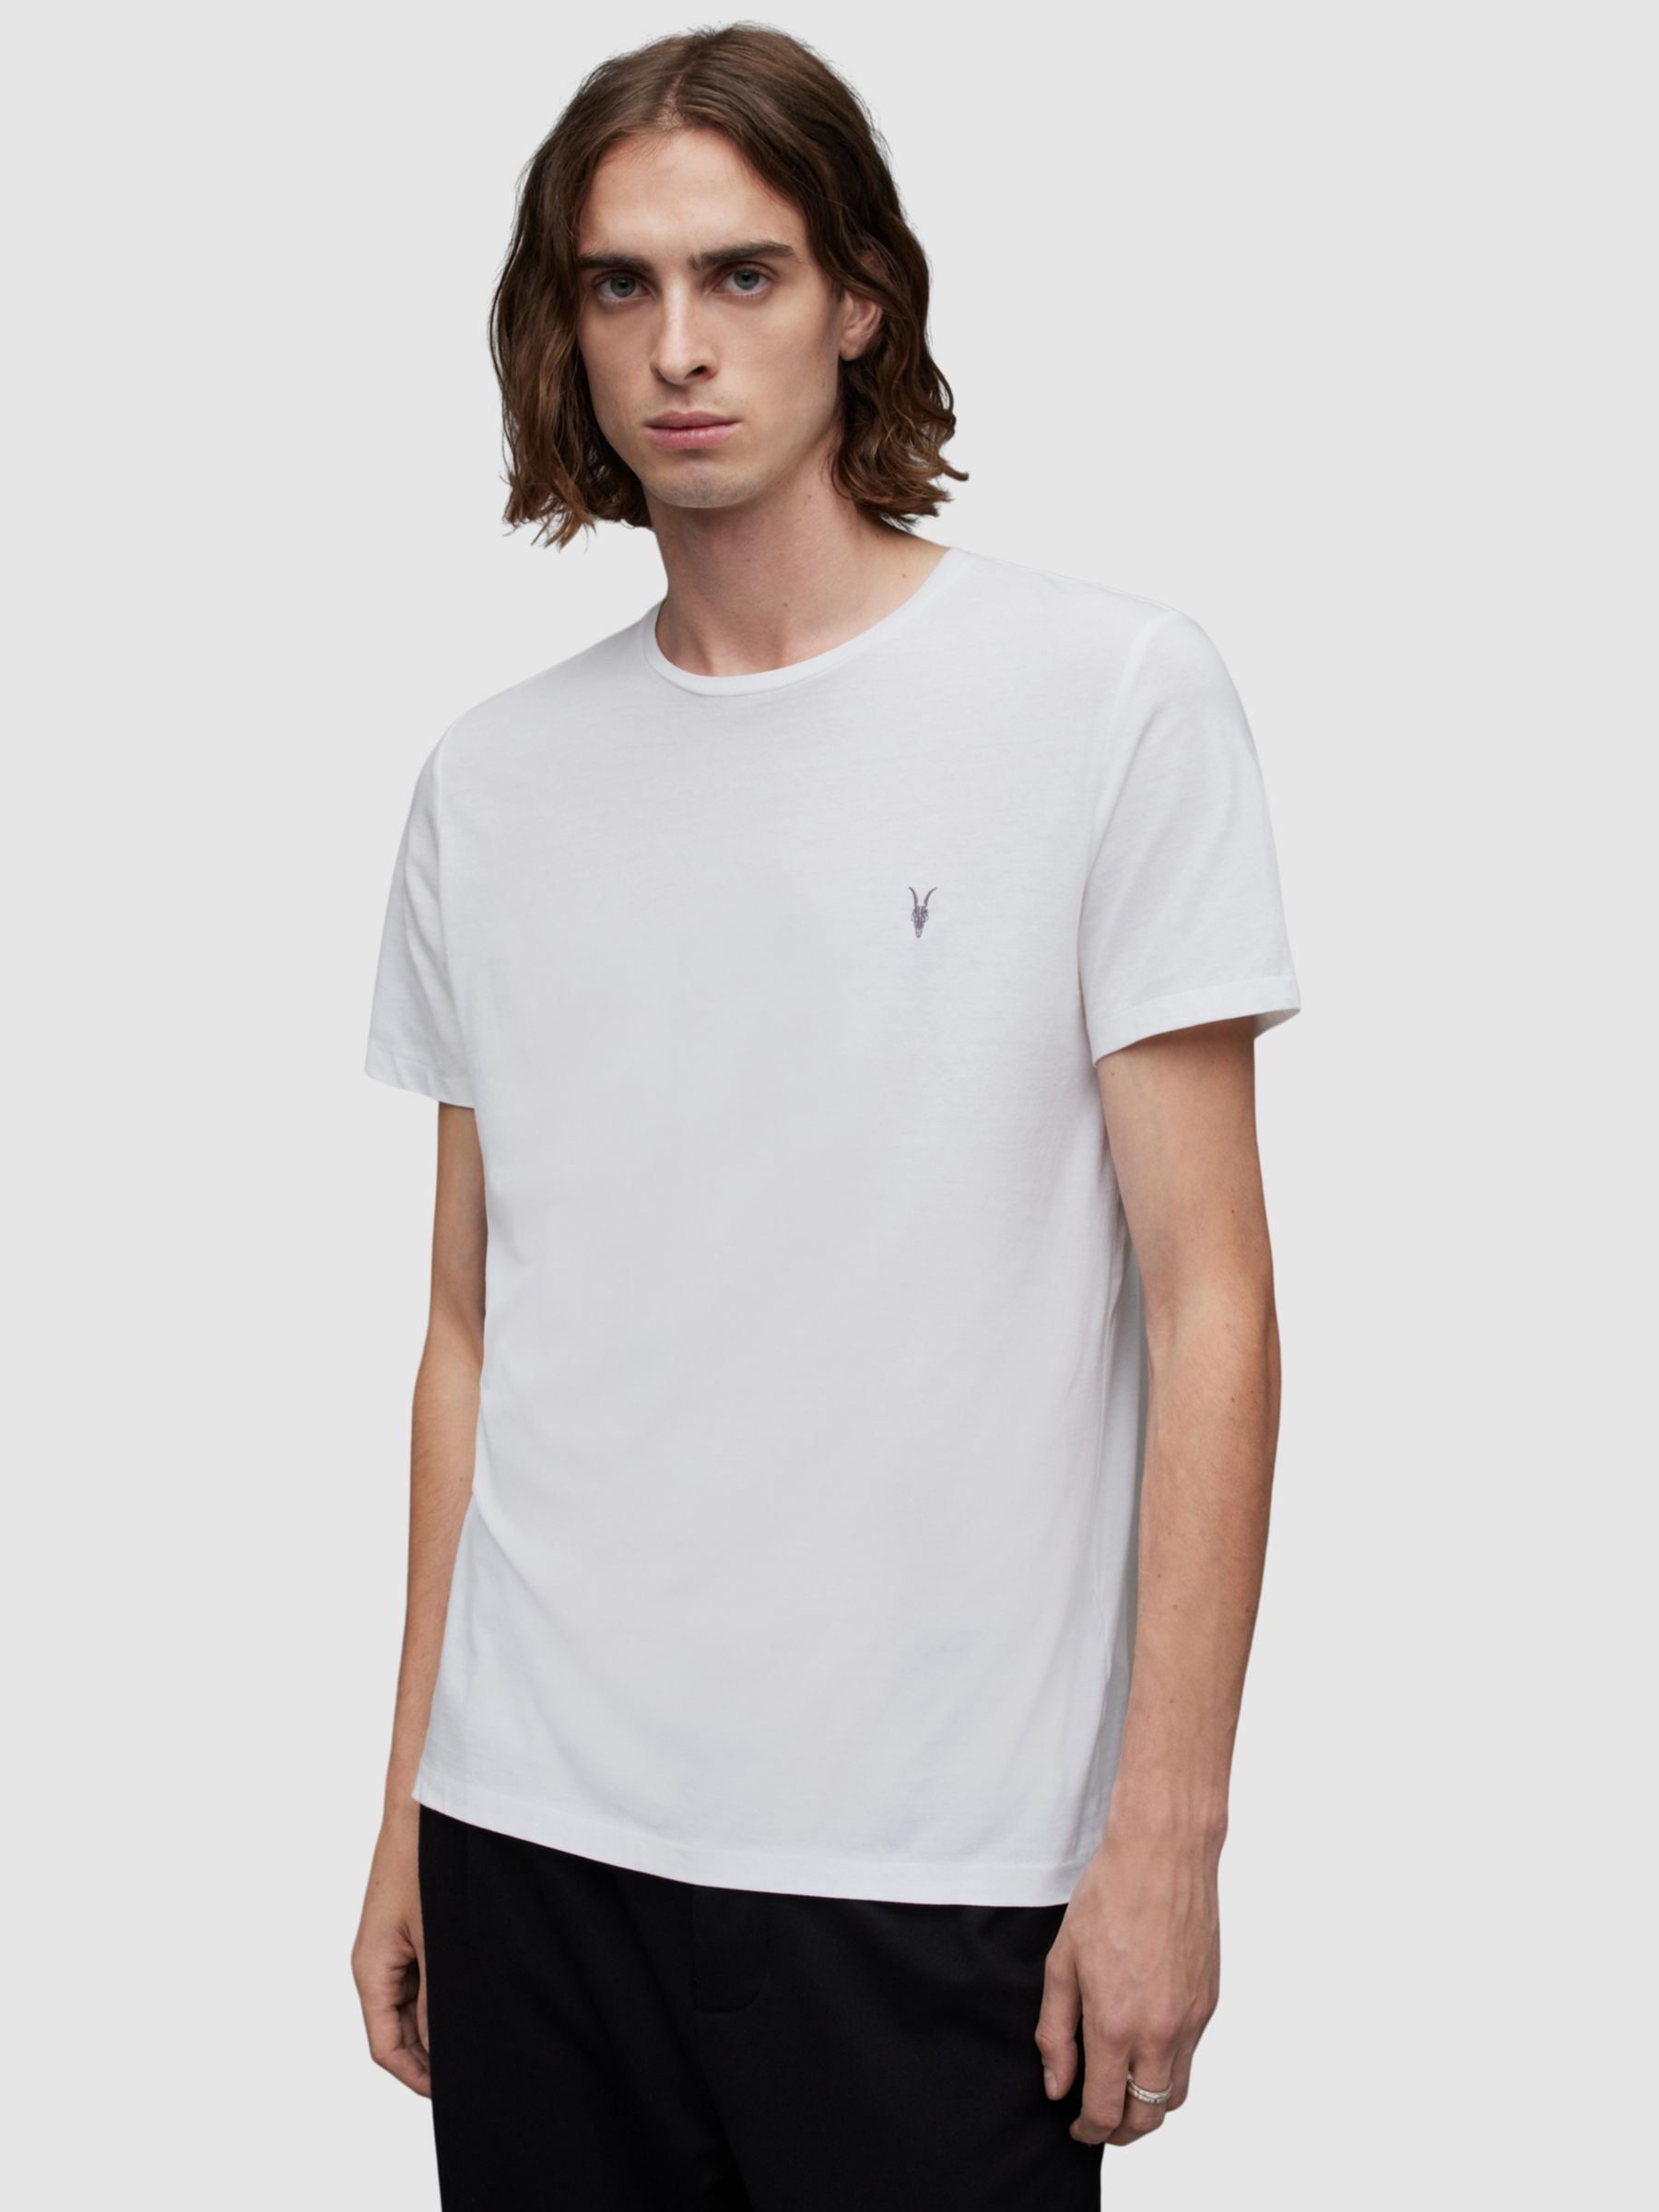 AllSaints Tonic Crew Neck T-Shirt, Optic White, XS